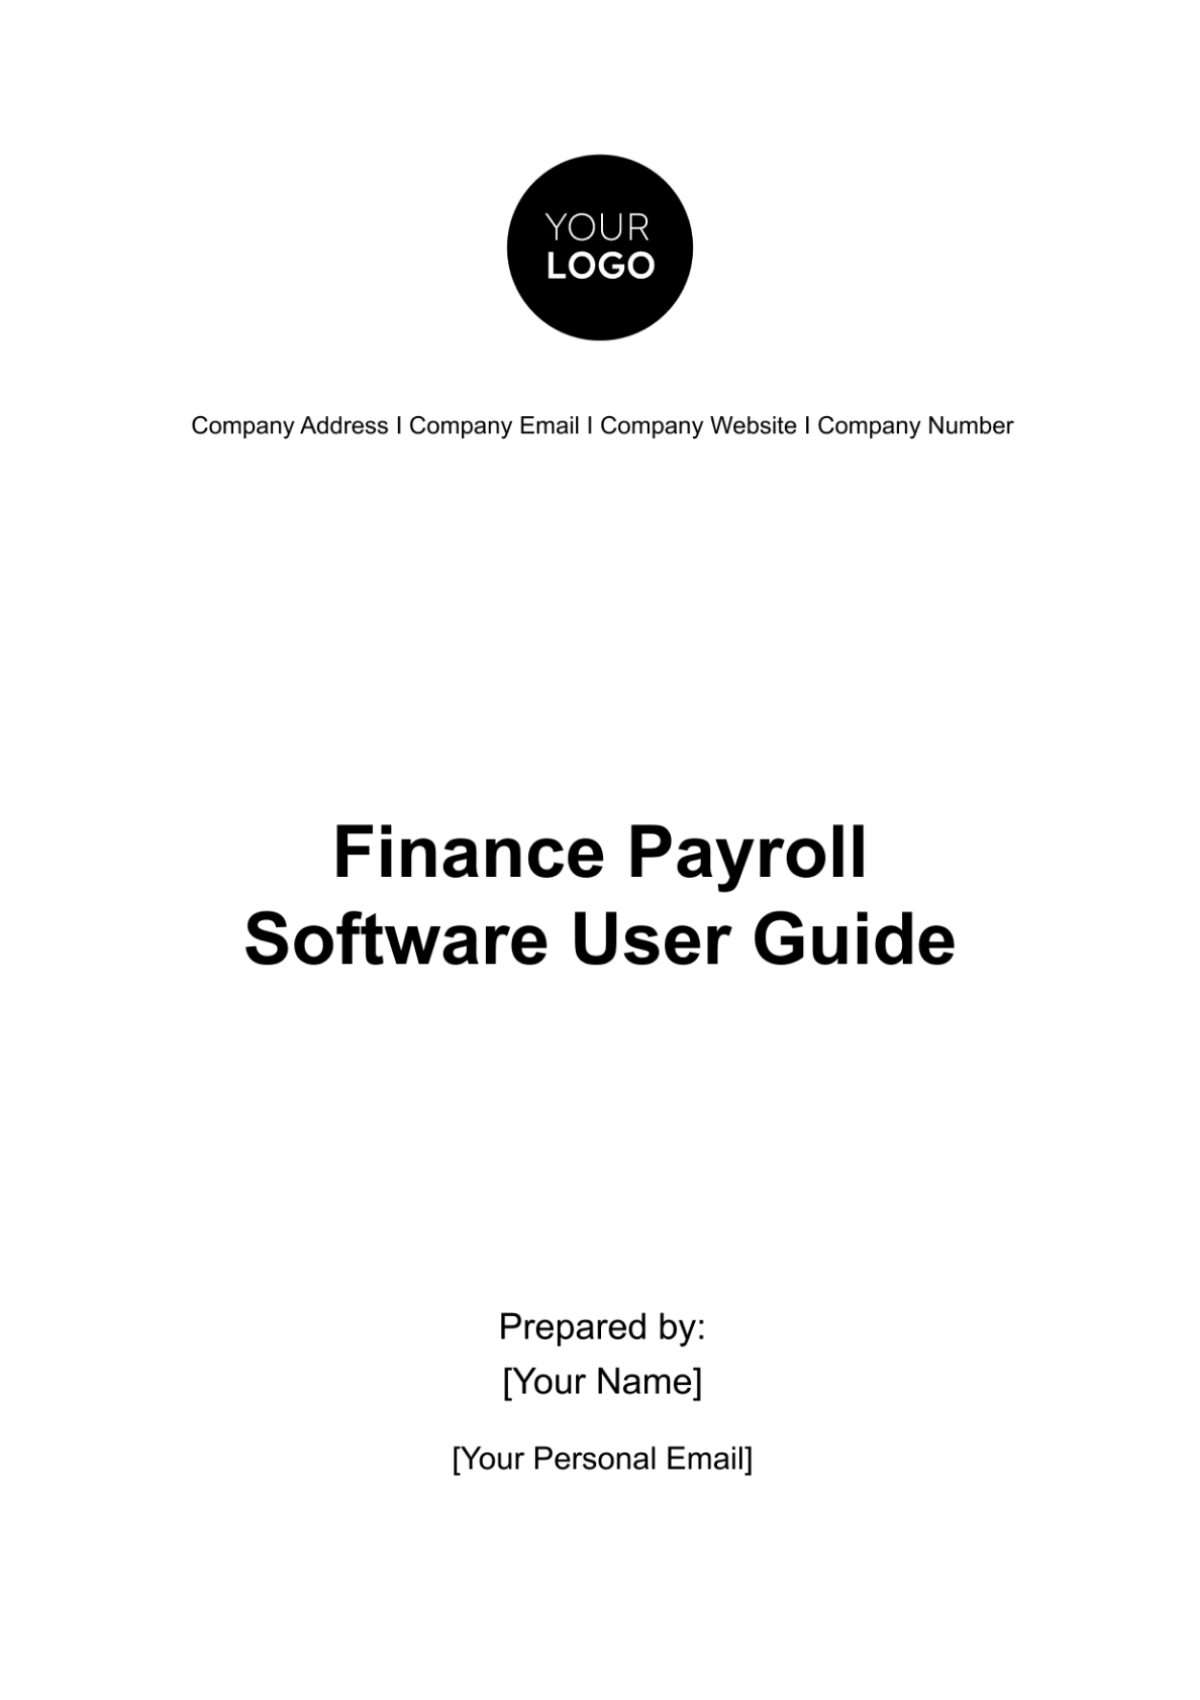 Finance Payroll Software User Guide Template